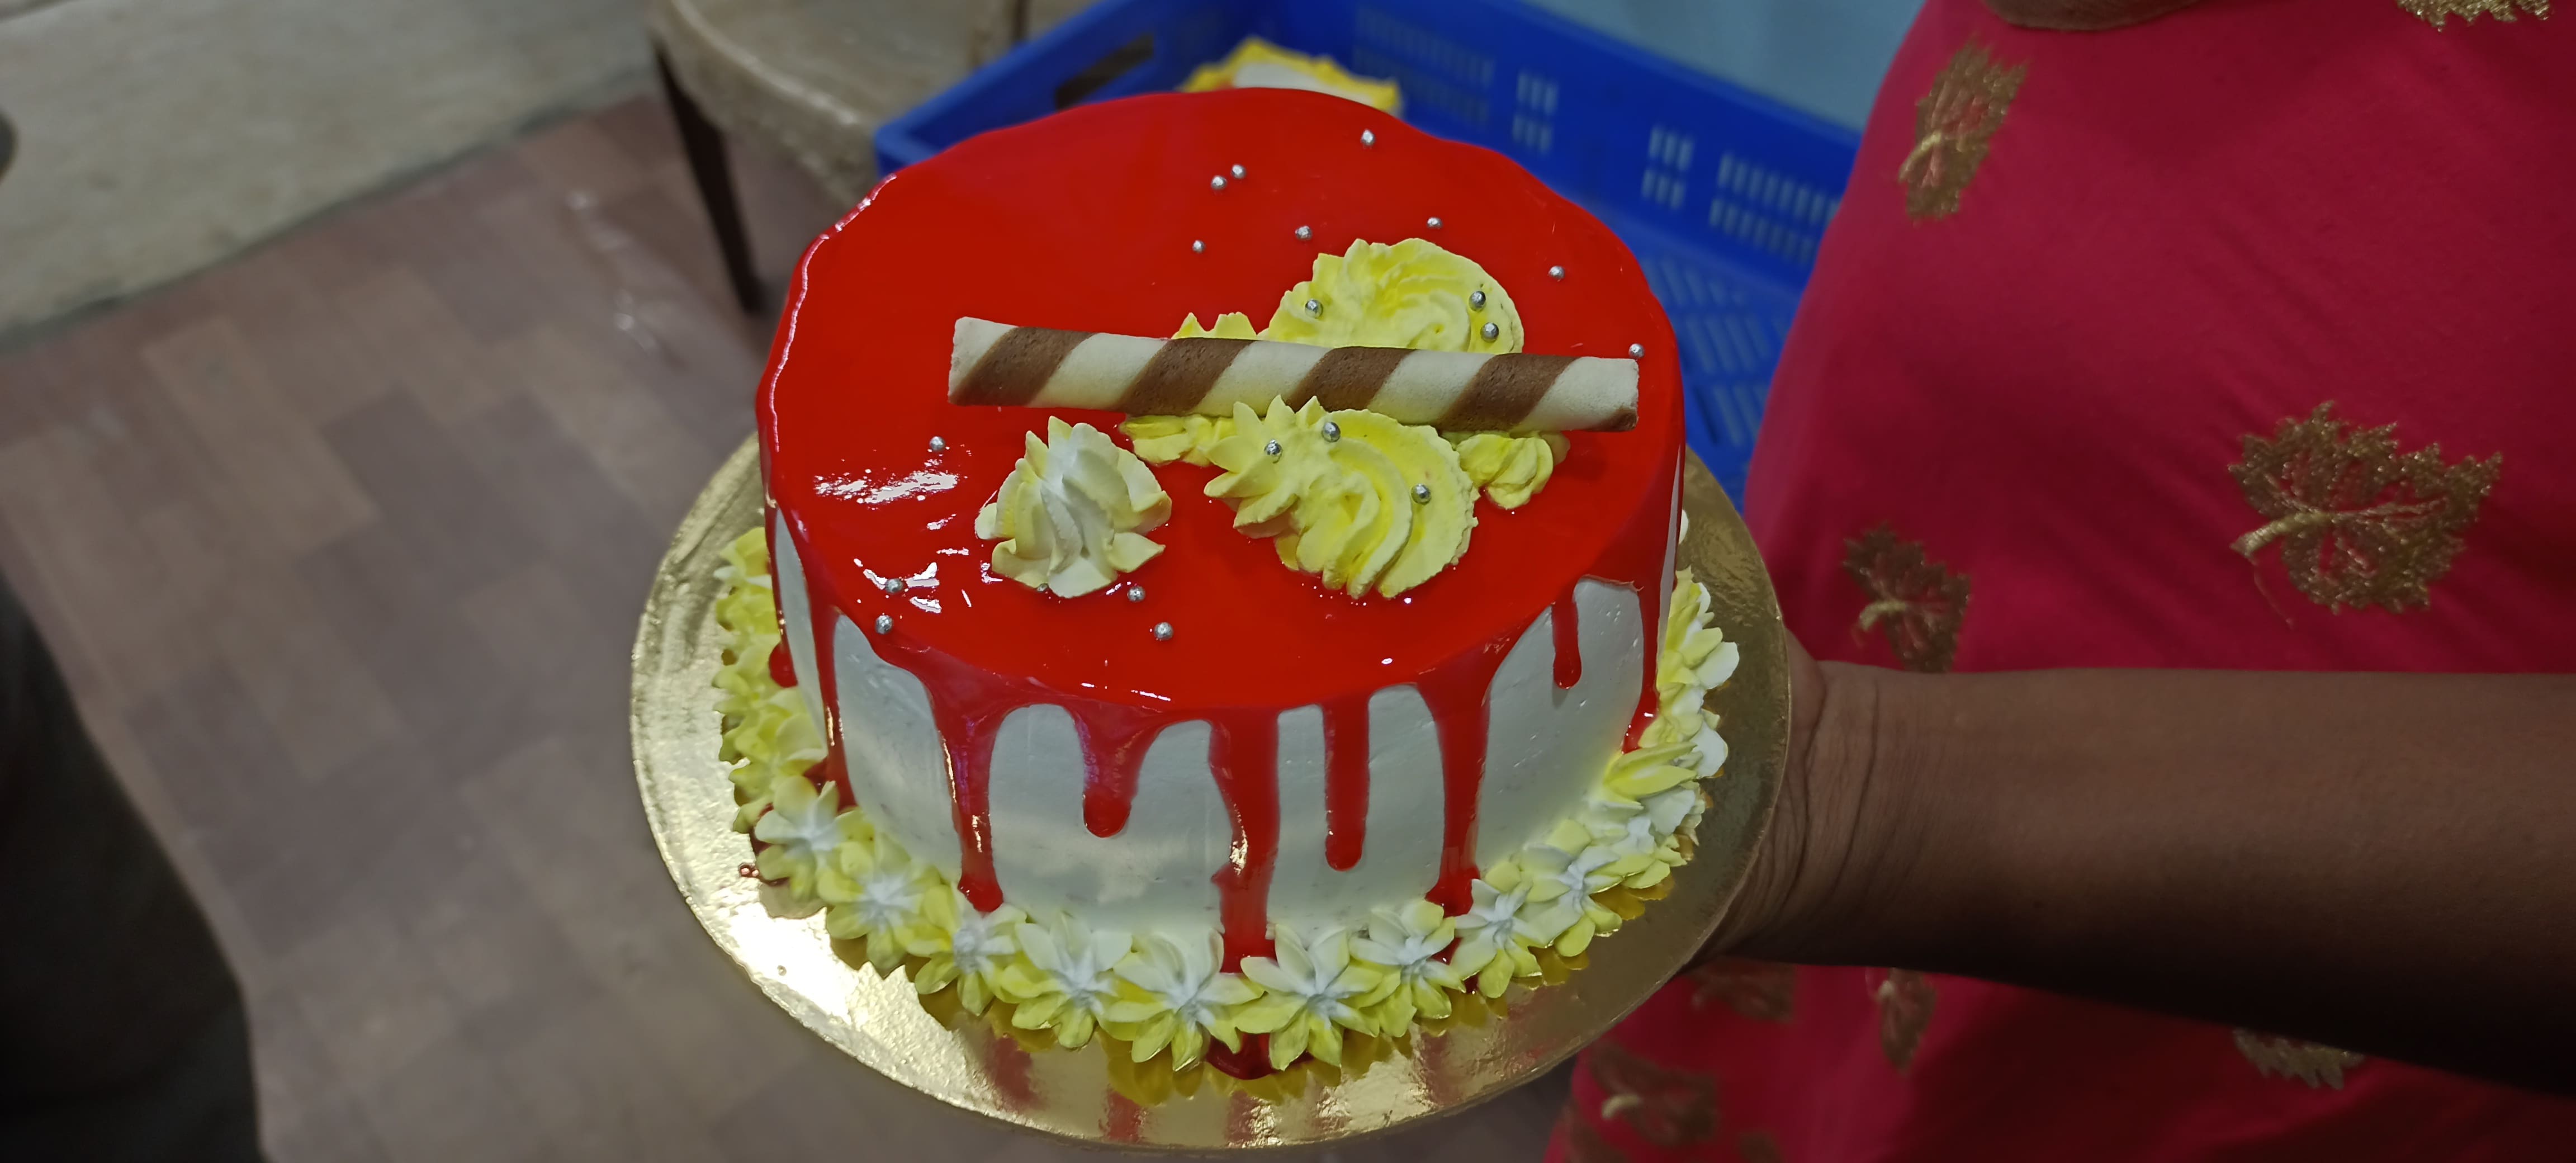 chocolate cake # icing chocolate cake# icing red roses # - YouTube